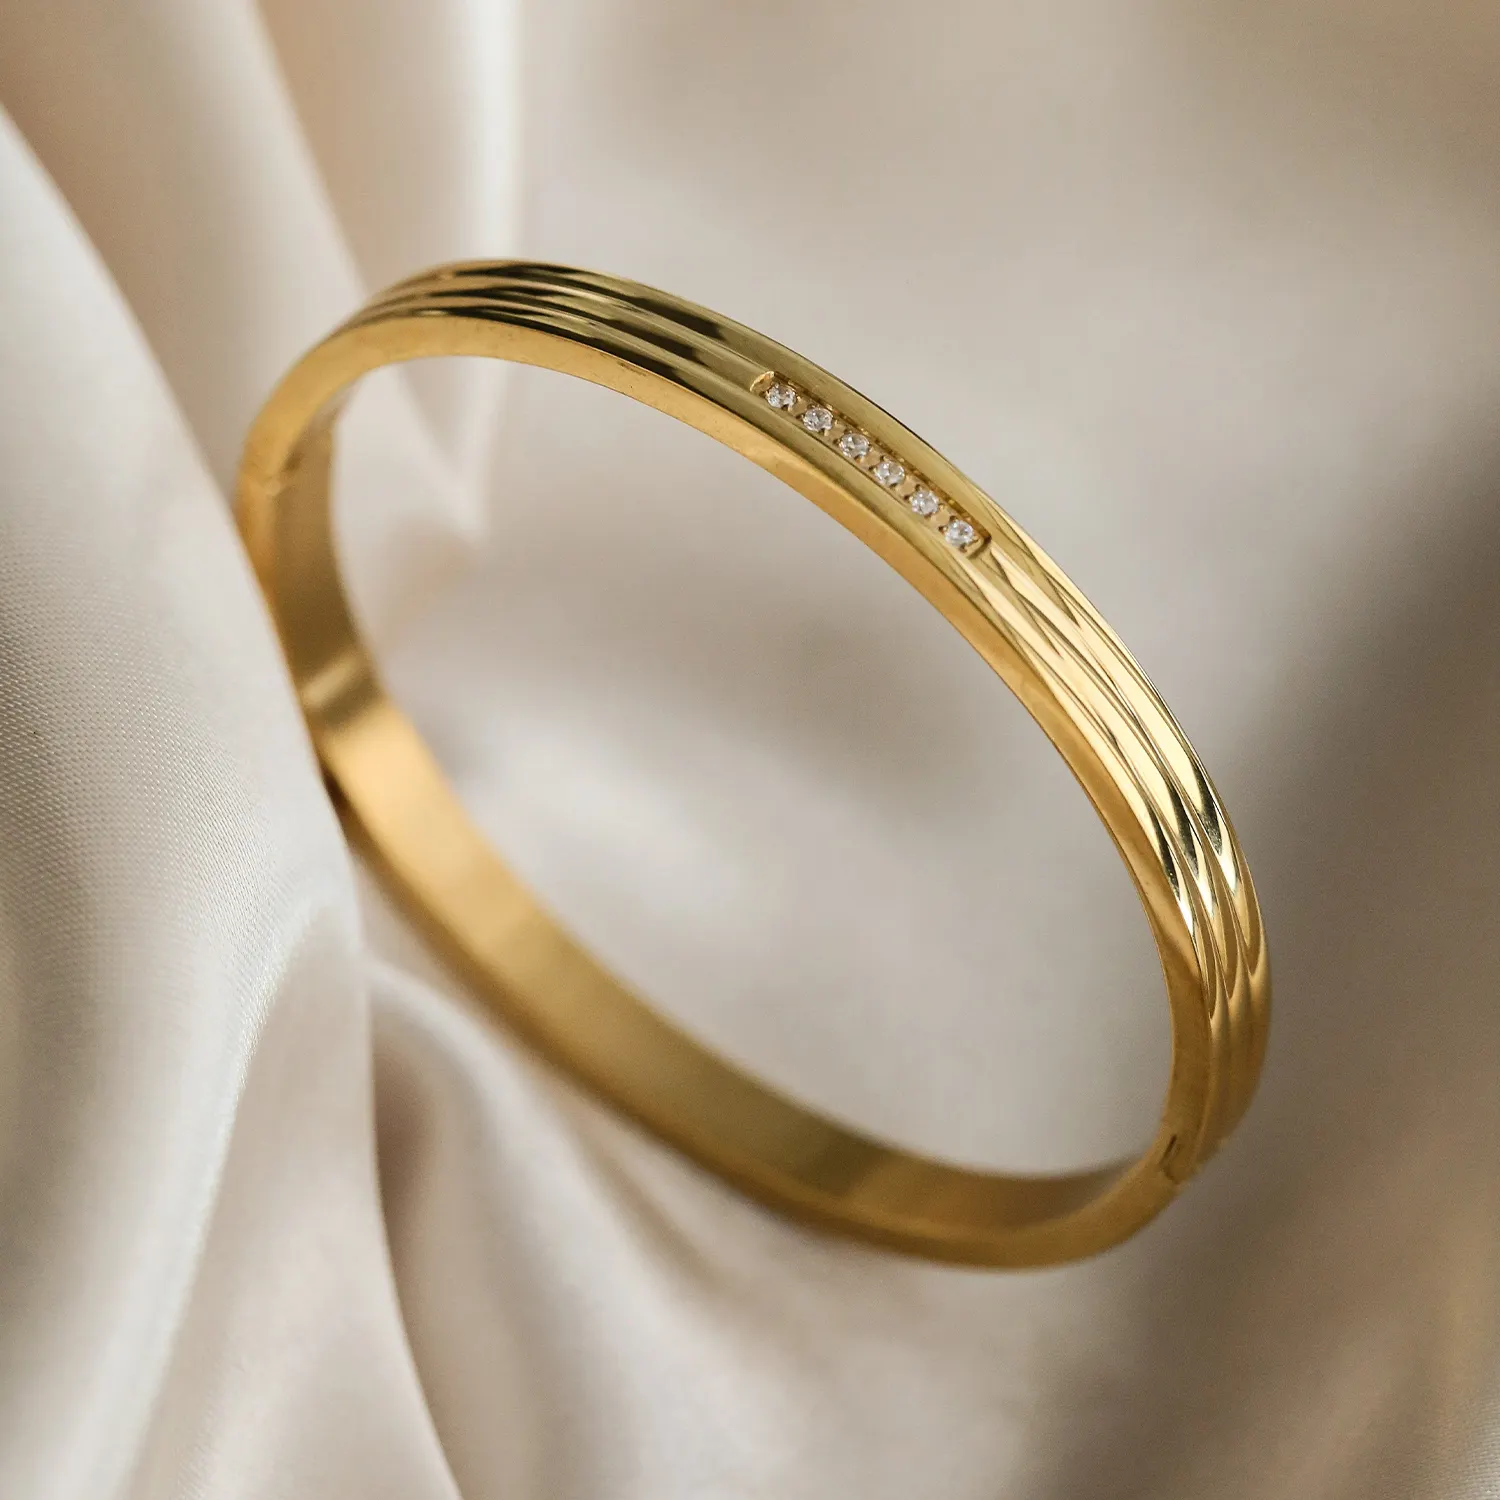 Fashion Jewelry 18K Gold Plated Bangles Women Stainless Steel Cubic Zirconia Bangle Bracelet Women Gift